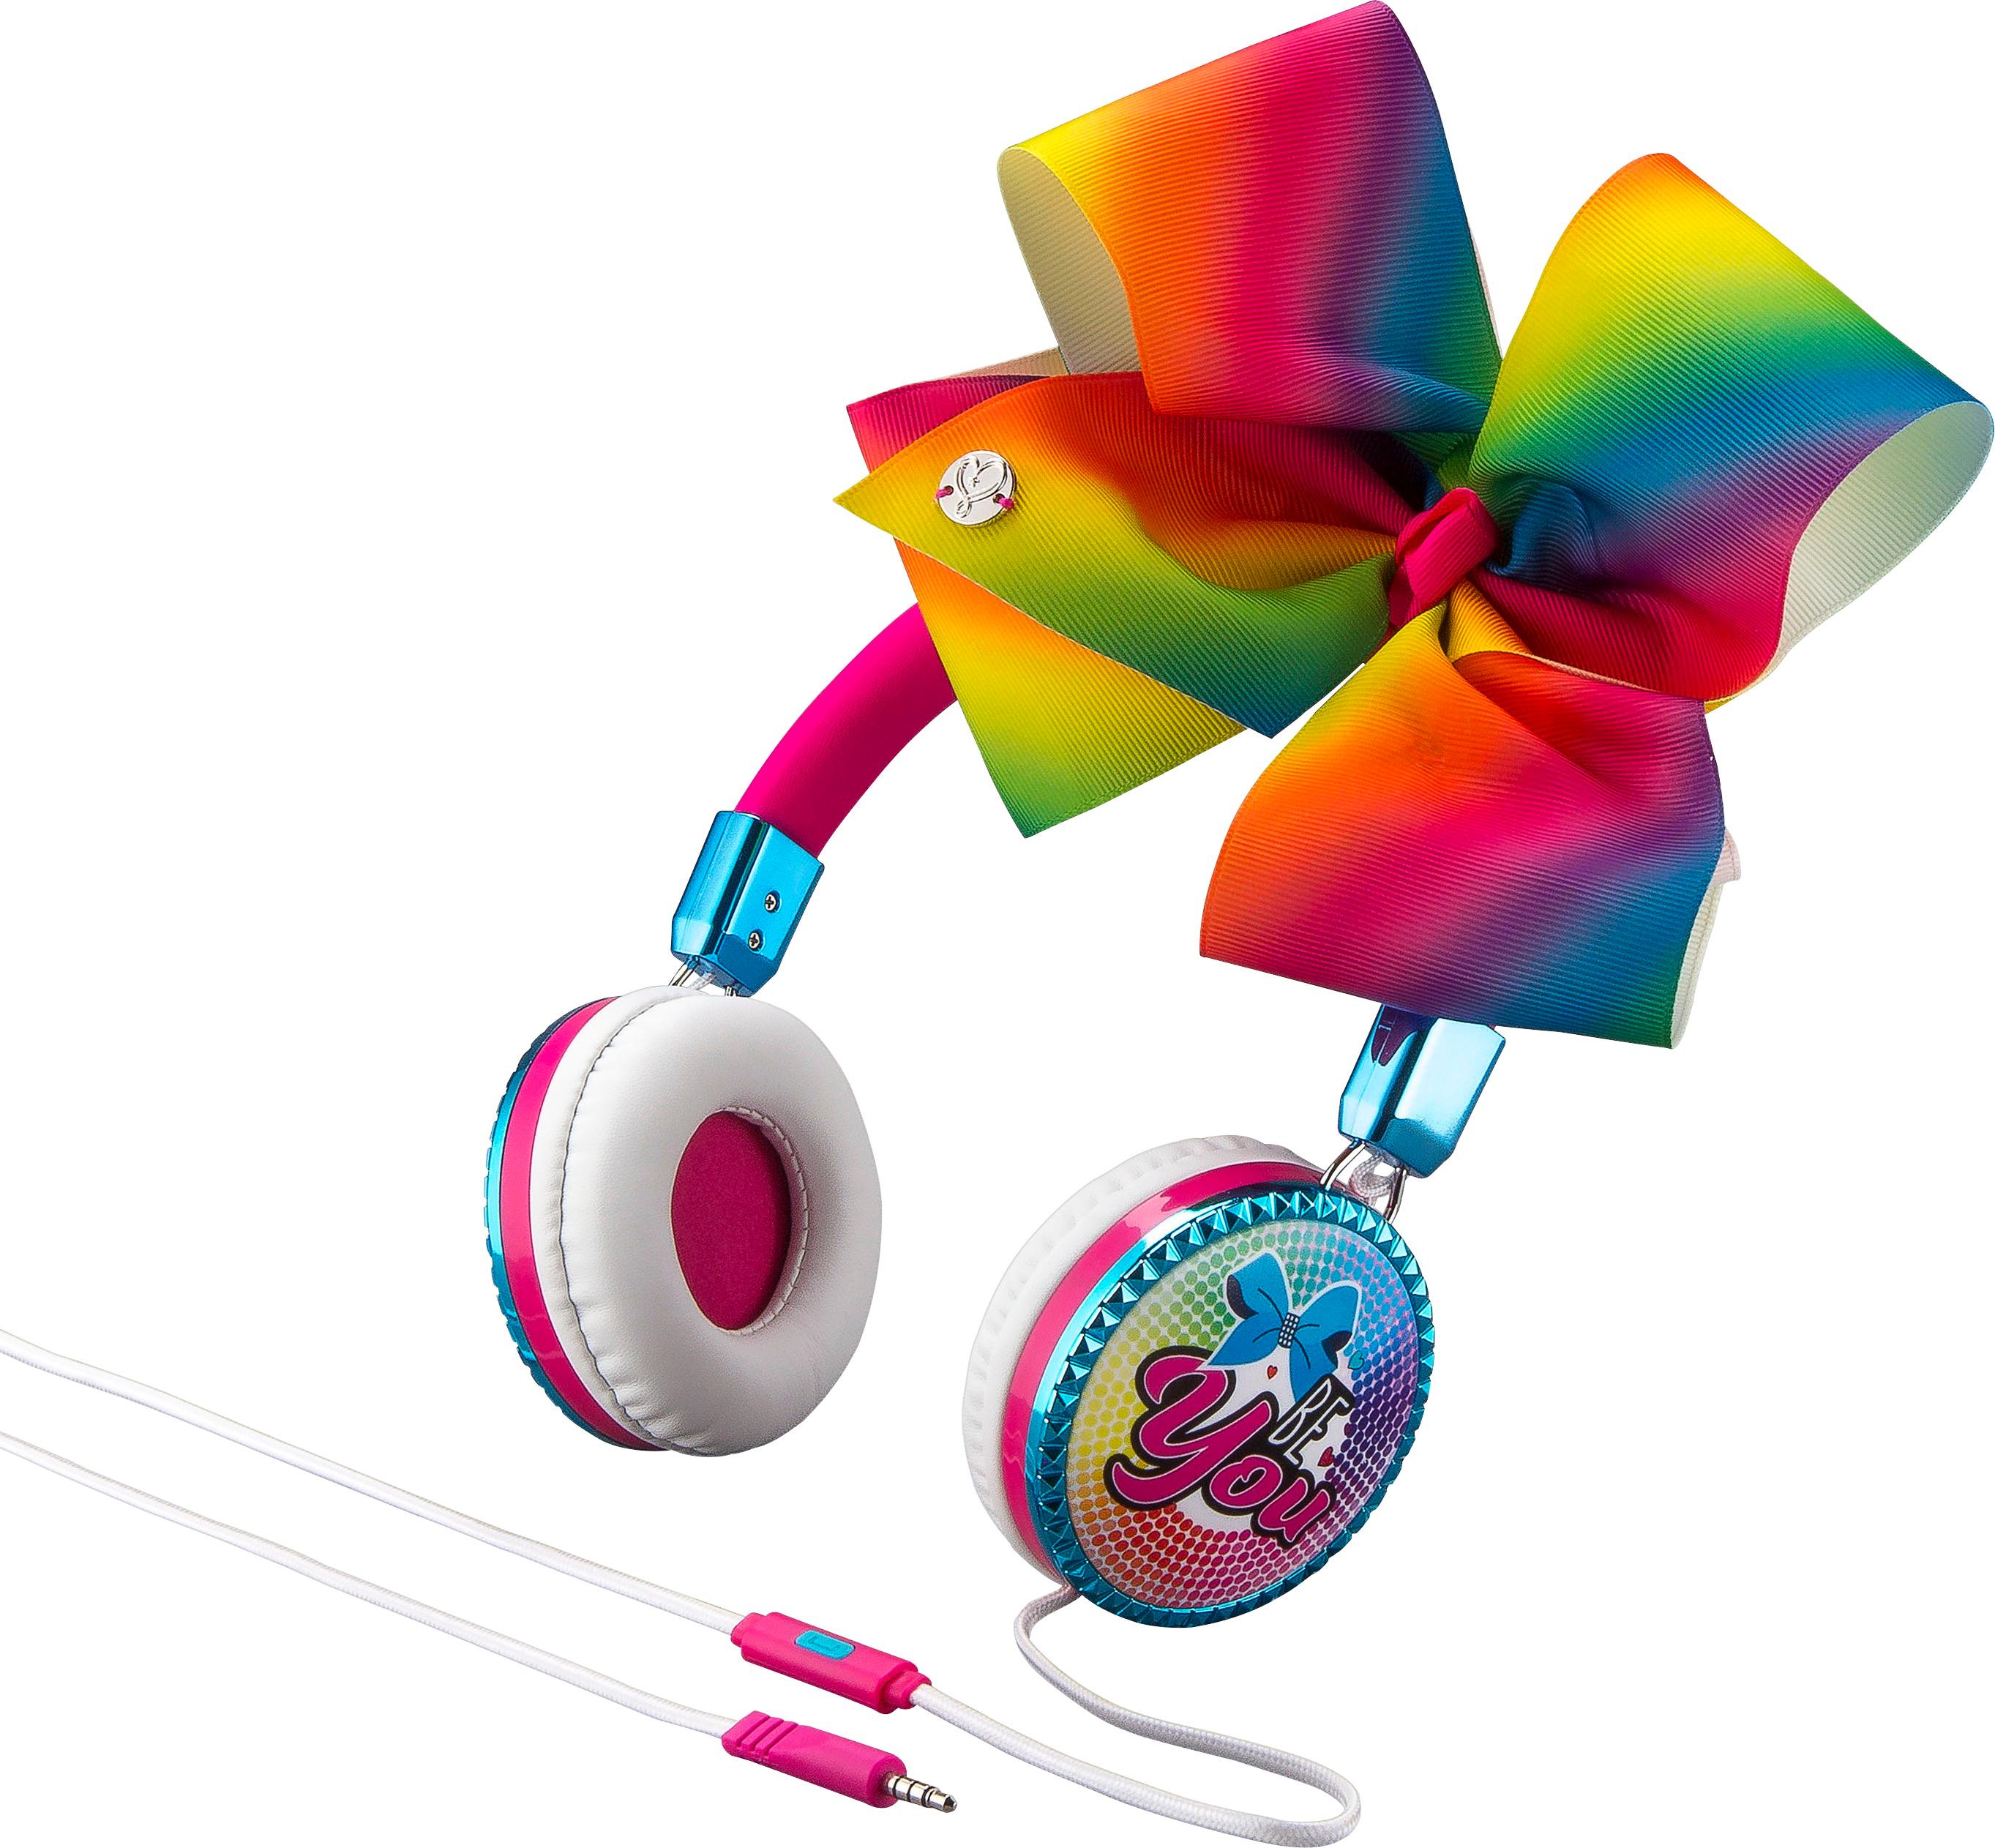 Left View: eKids - JoJo Siwa Wired On-Ear Headphones - White/Blue/Yellow/Green/Pink